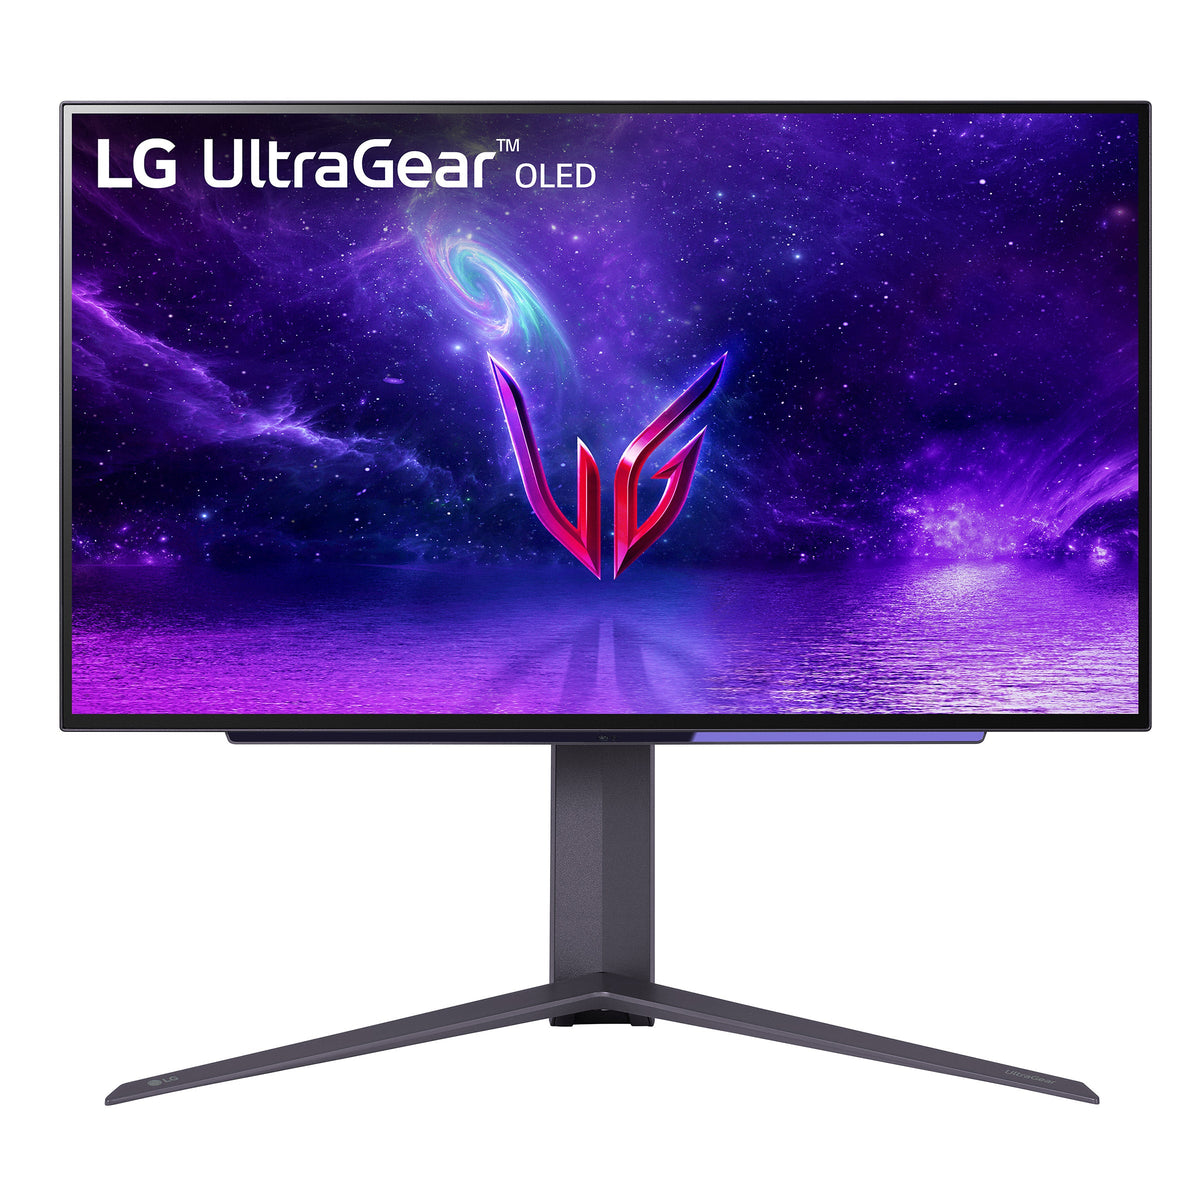 LG 27” Class UltraGear QHD OLED Gaming Monitor, $100 Digital Credit Included